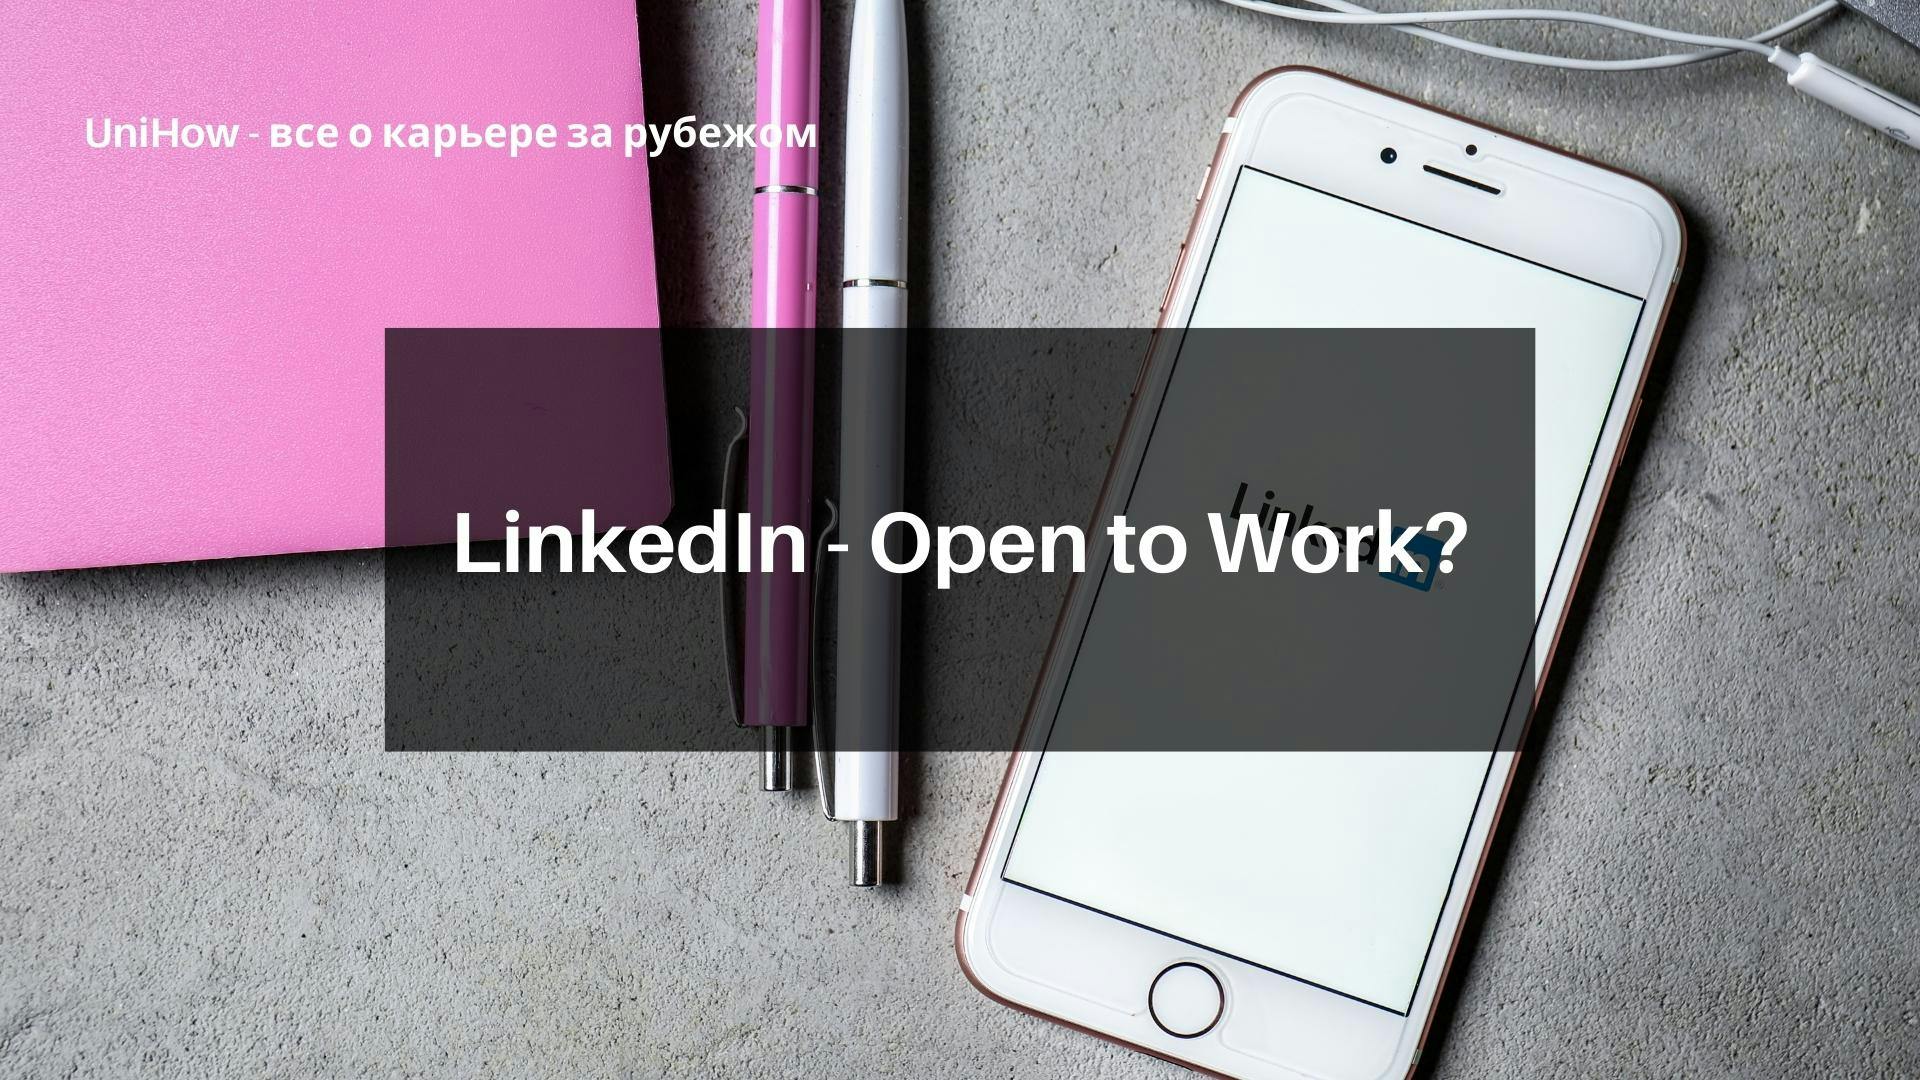 LinkedIn - Open to Work?